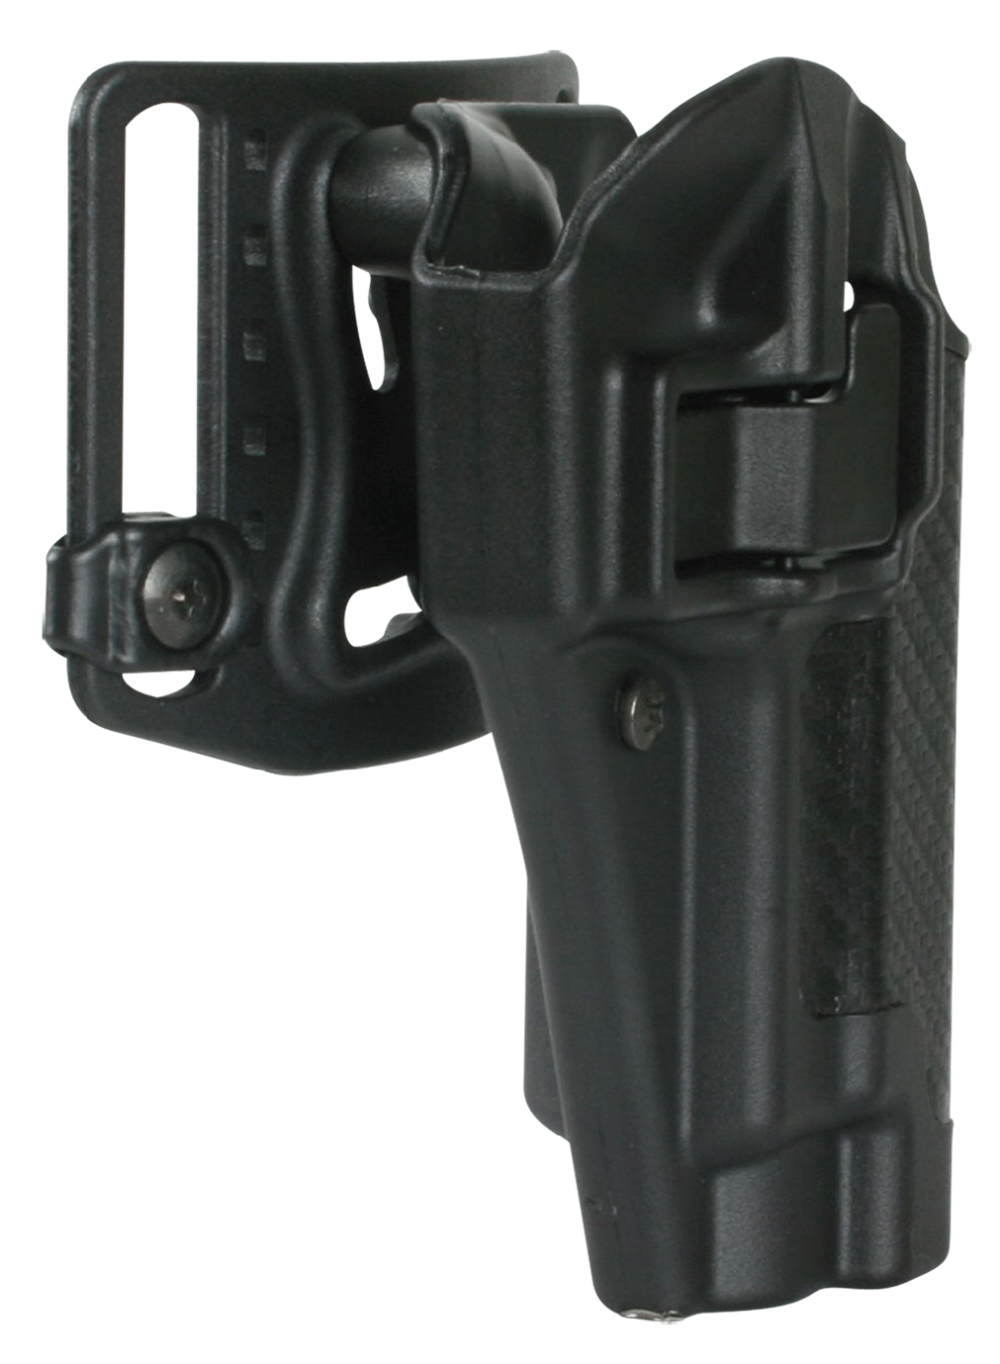 Blackhawk Serpa CQC Concealment Holster, OWB, RH, Fits Glock 20, Black Carbon Fiber Pattern (410013BKR)